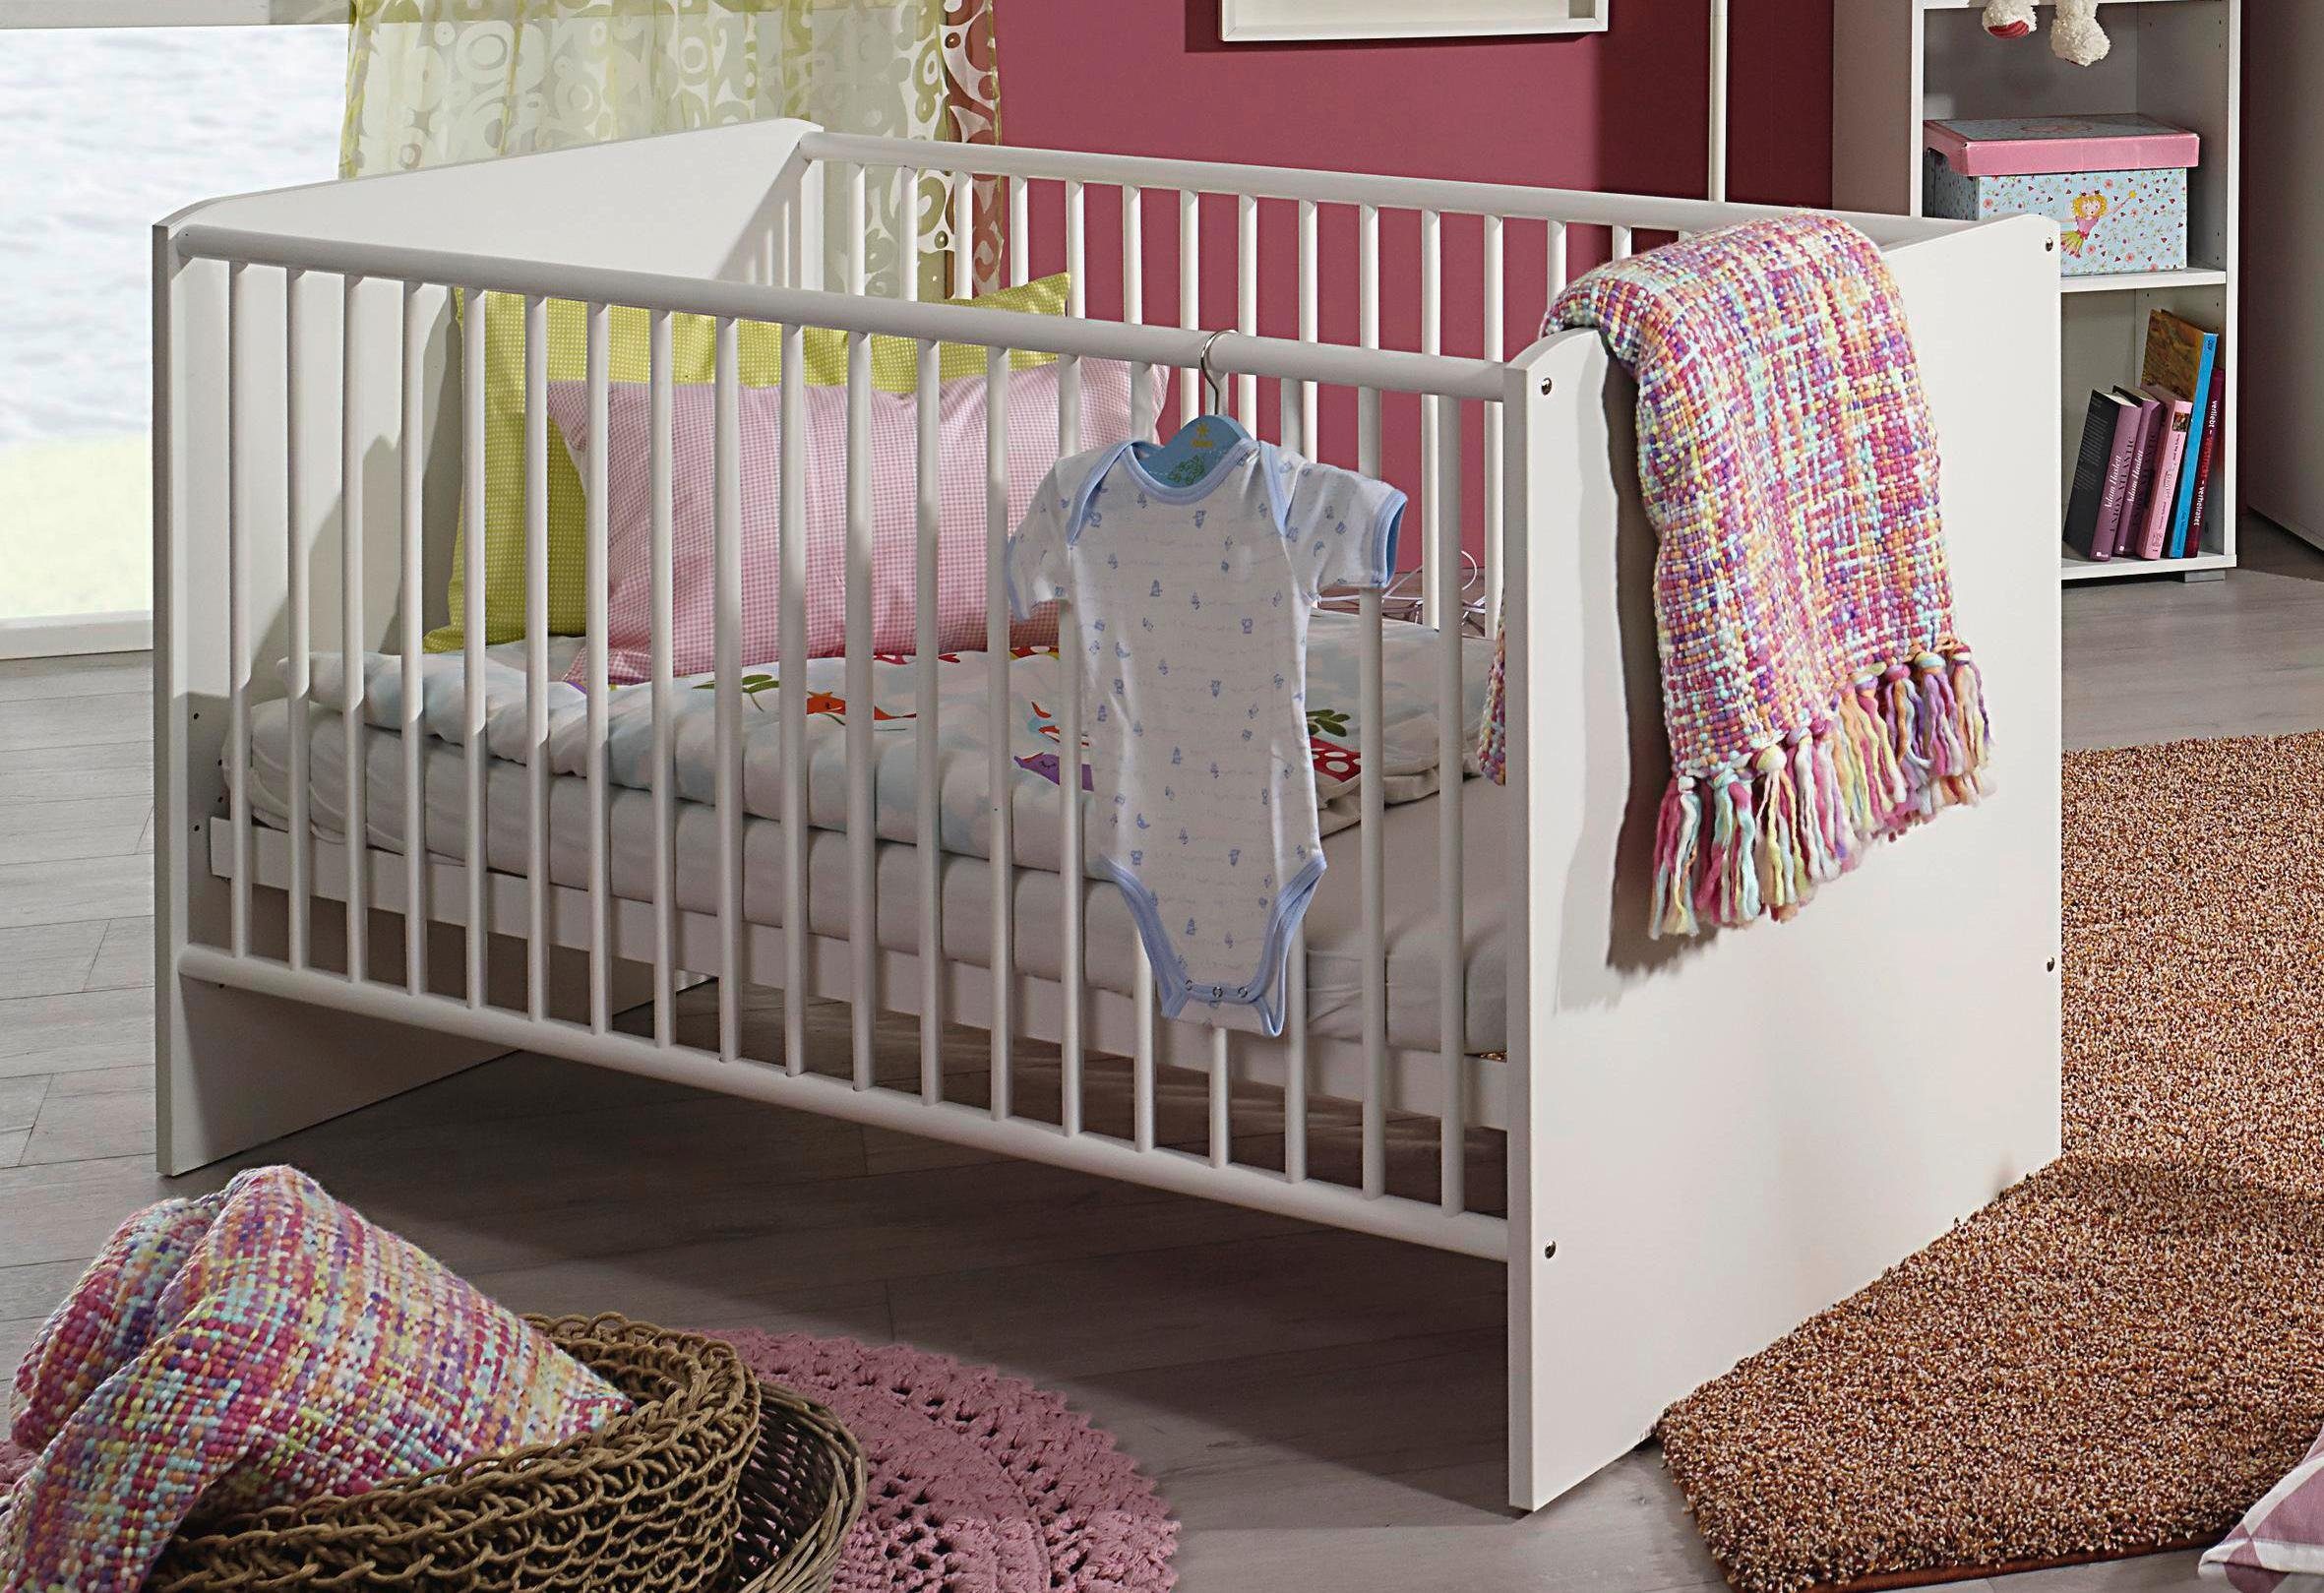 Modern Design Baby Crib in Pine Wood